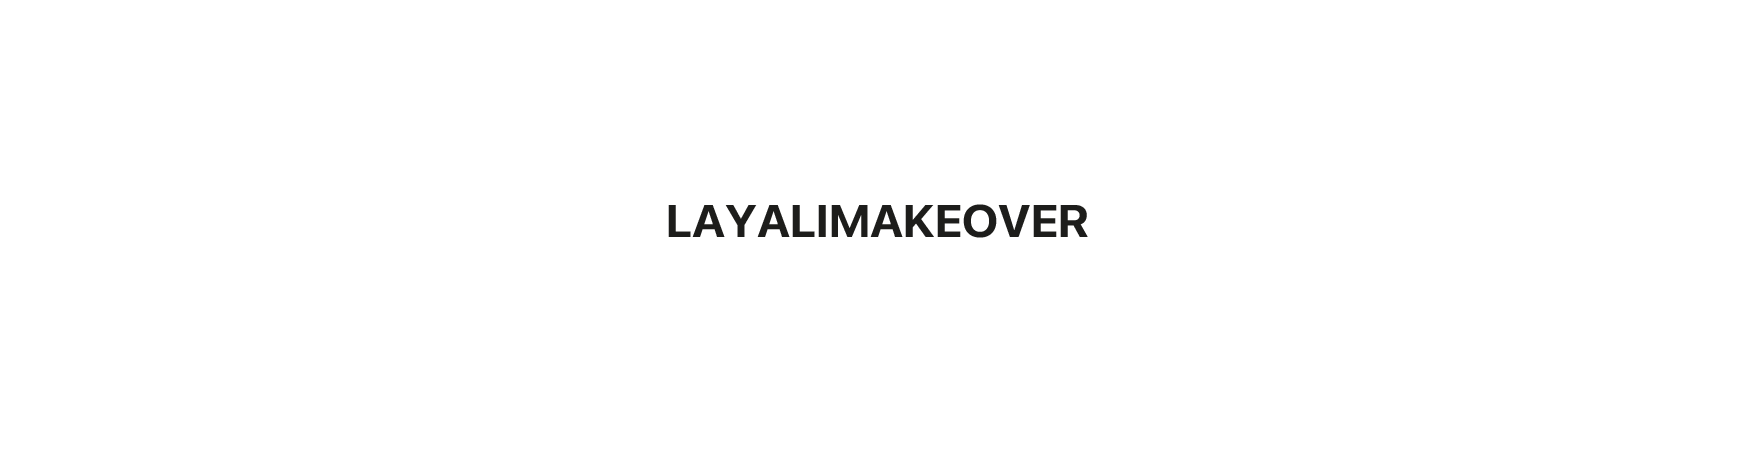 Layali Makeover